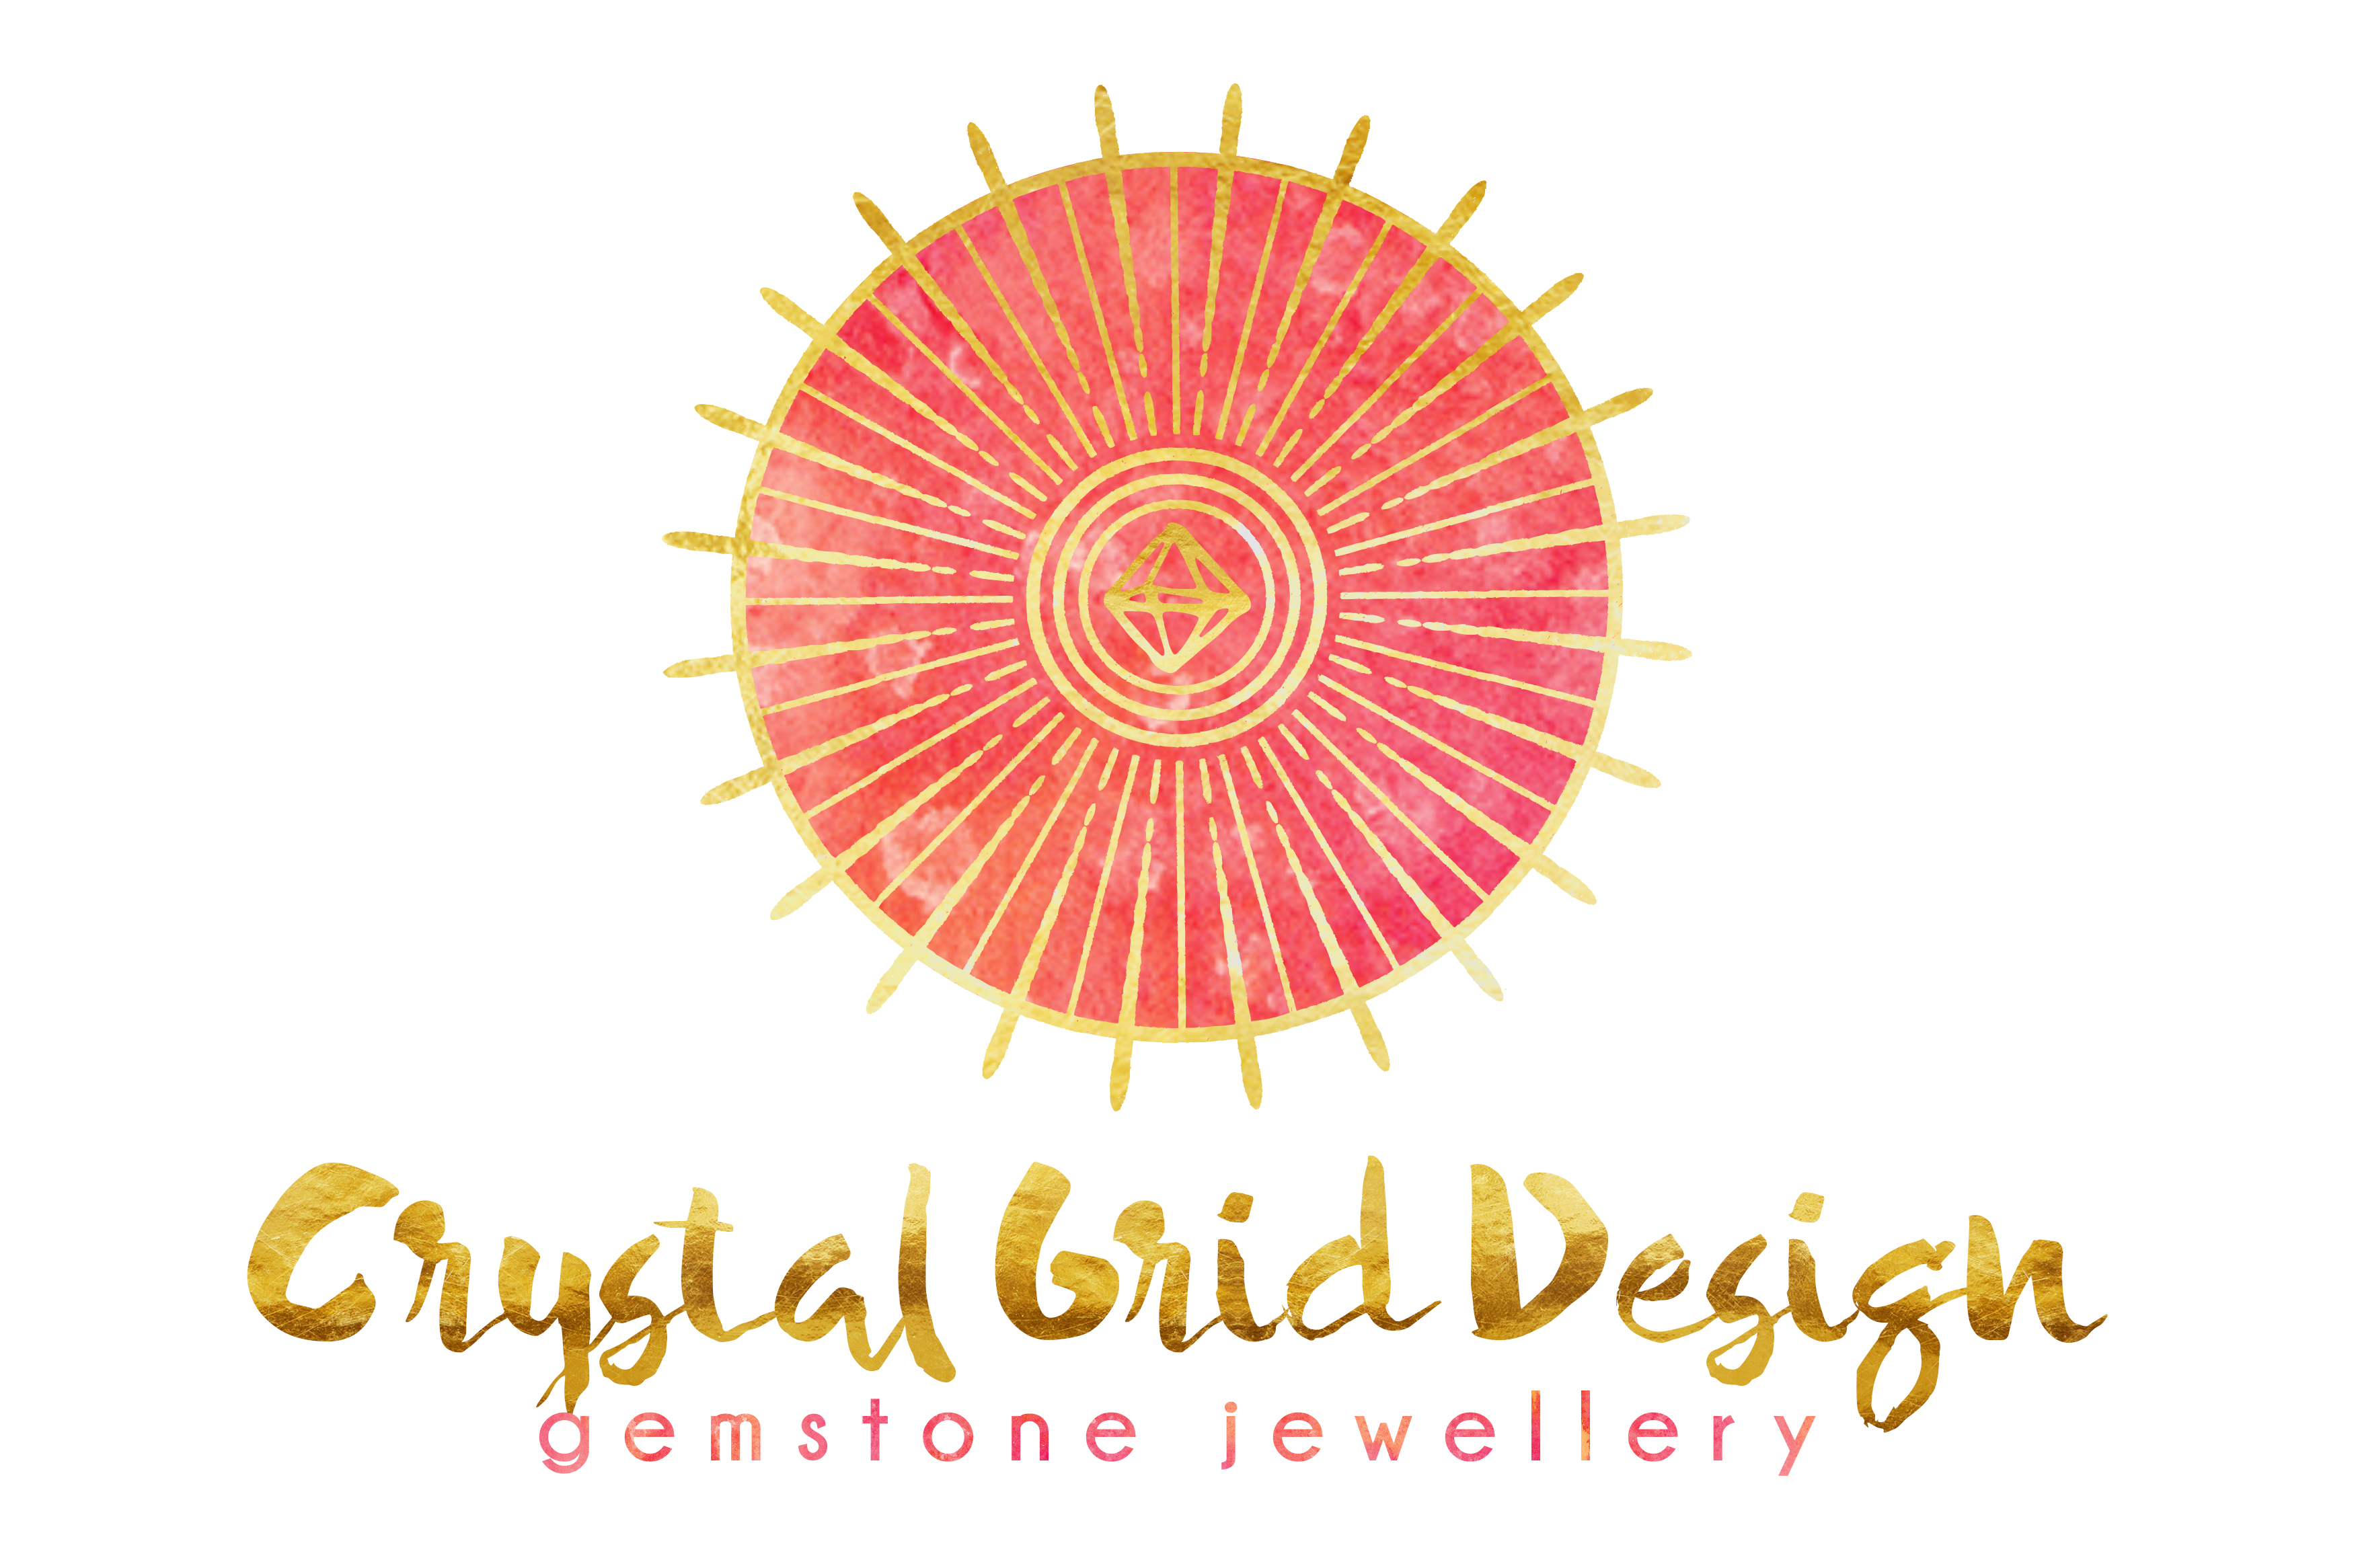 Crystal Grid Design